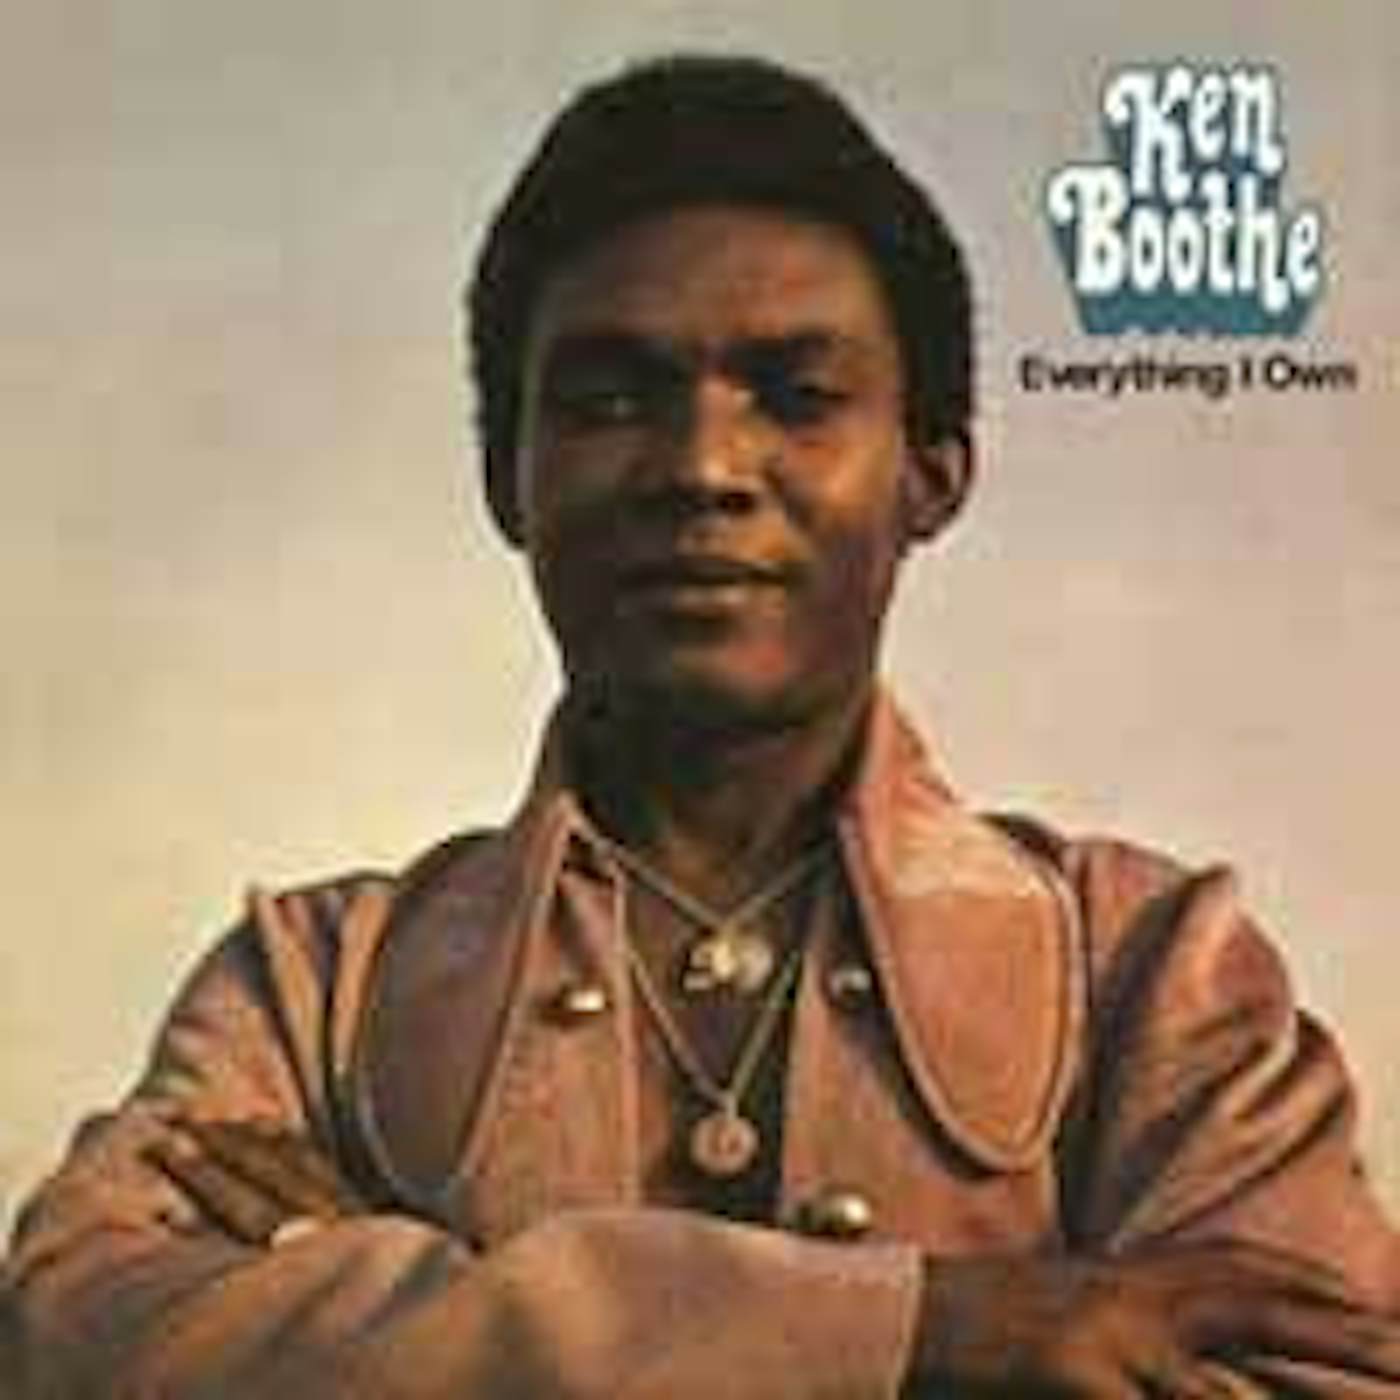  Ken Boothe LP - Everything I Own (Vinyl)